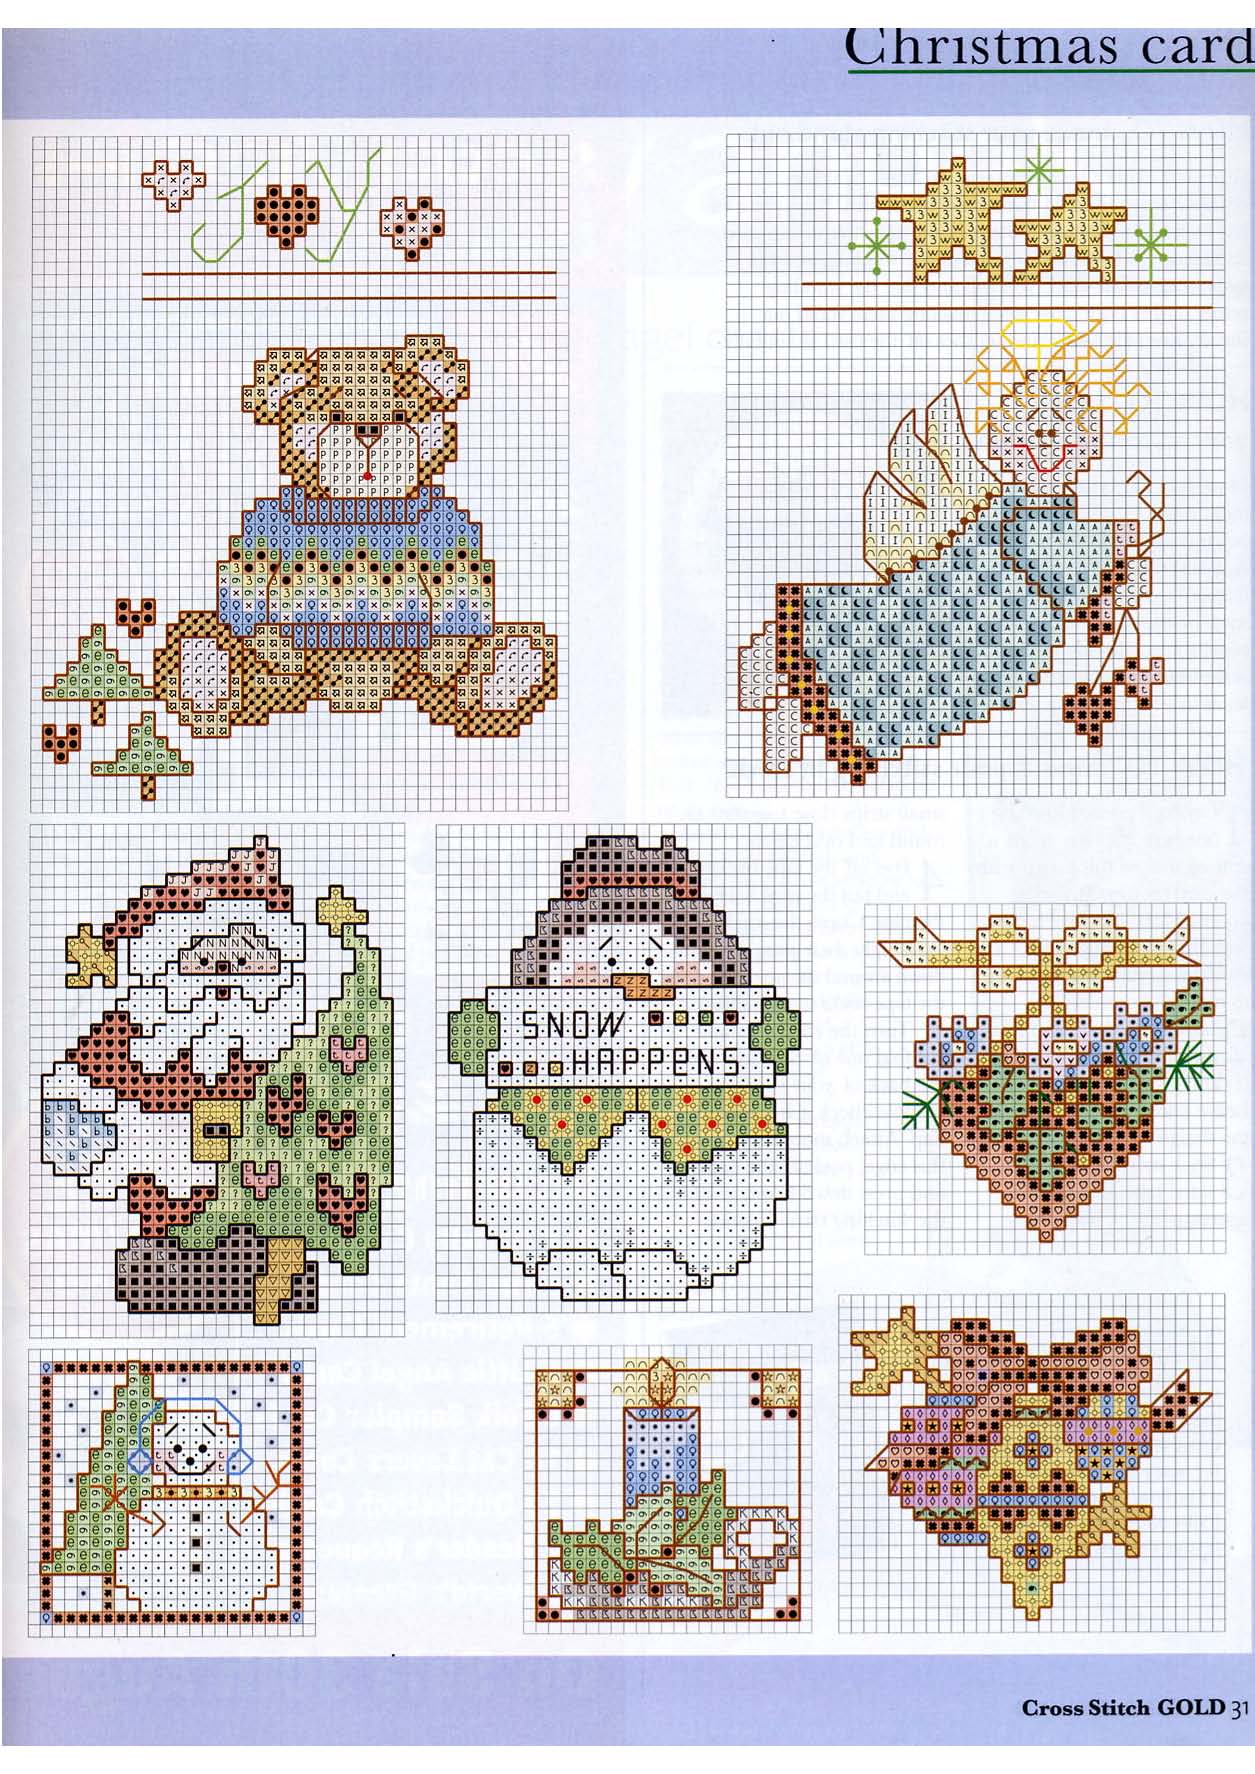 Christmas cards cross stitch patterm (4)